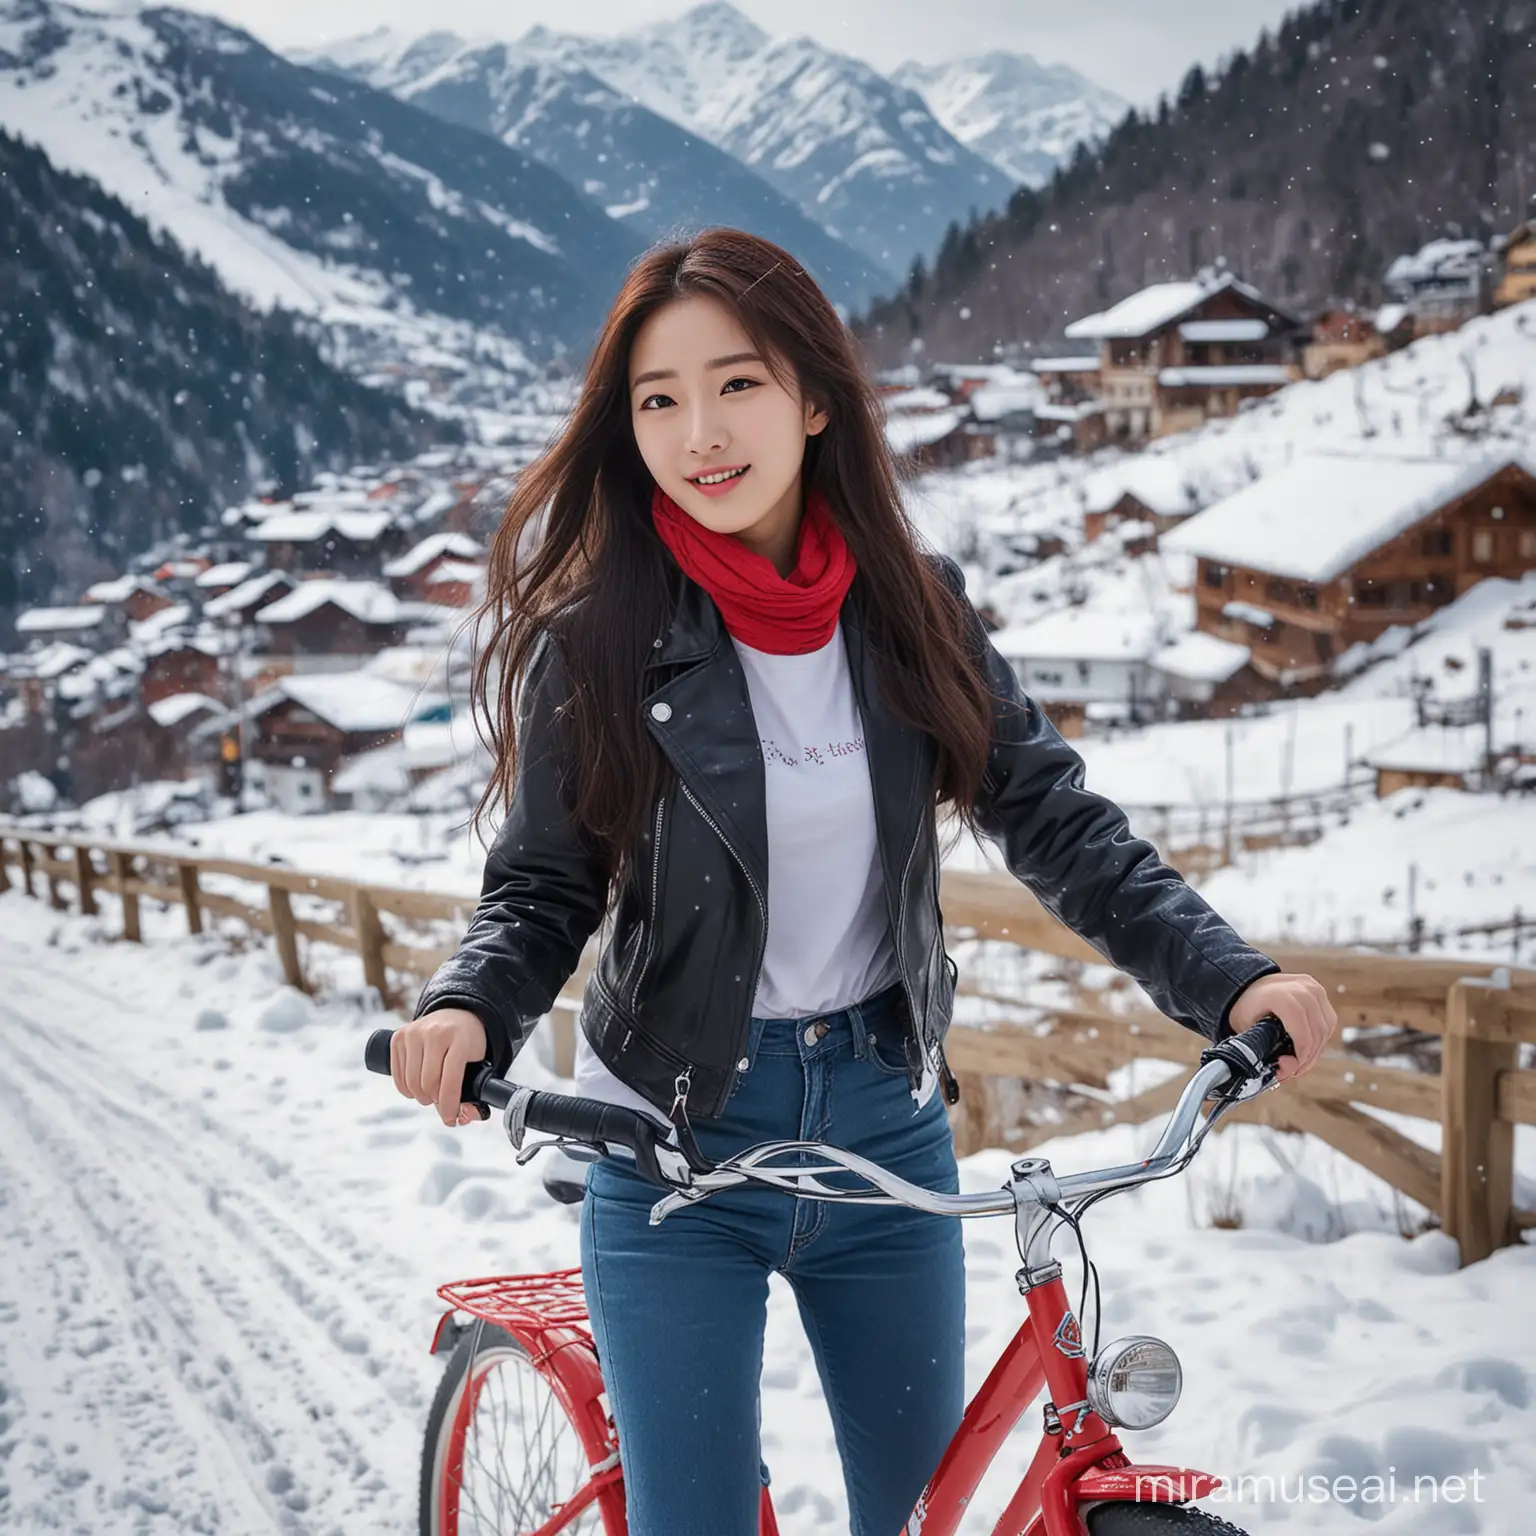 Korean Girl Cycling in Snowy Alps Vibrant Realistic Portrait